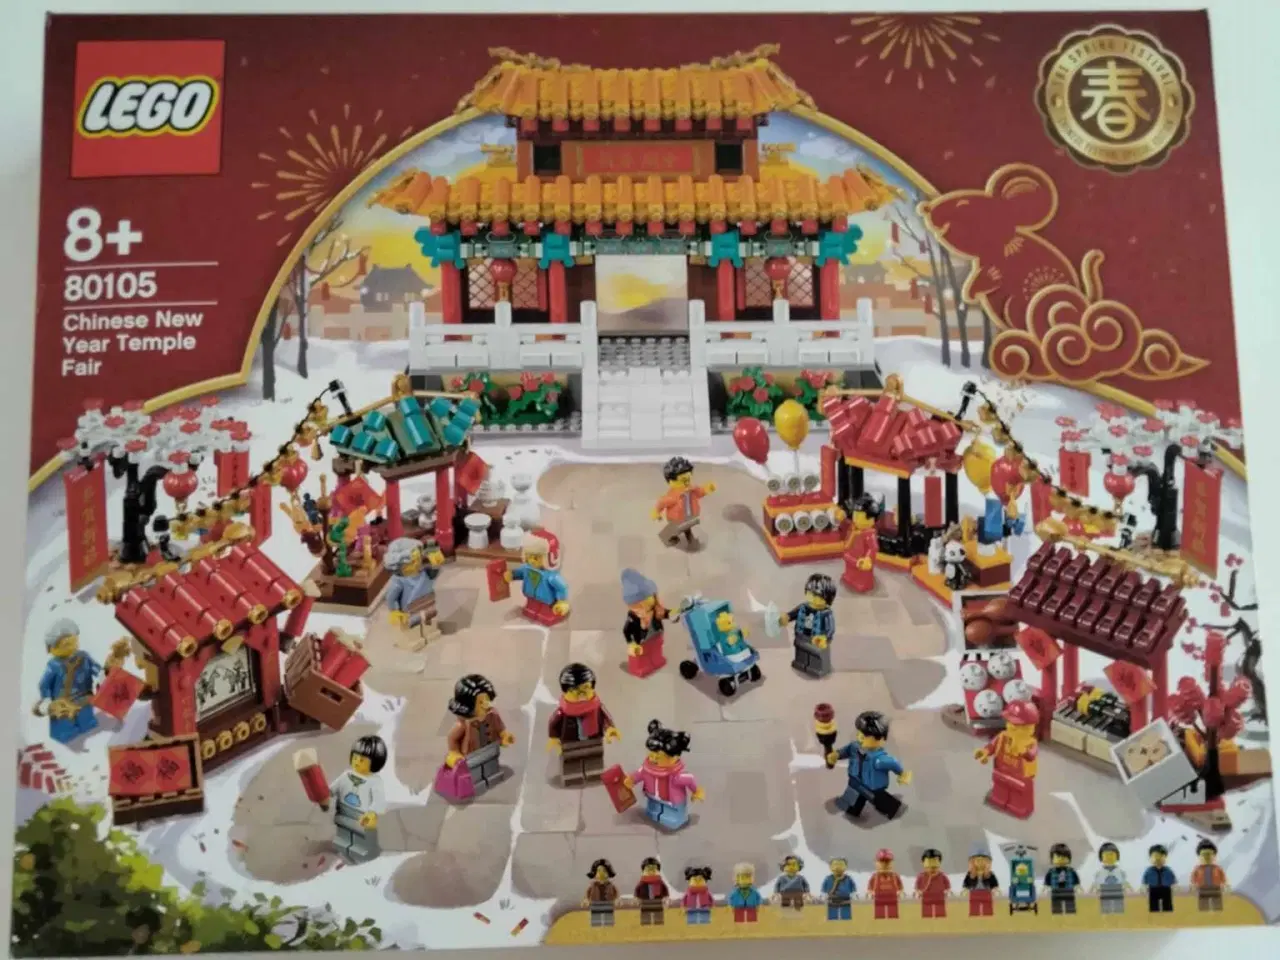 Billede 3 - Chinese New Year Temple Fair, sæt nr. 80105